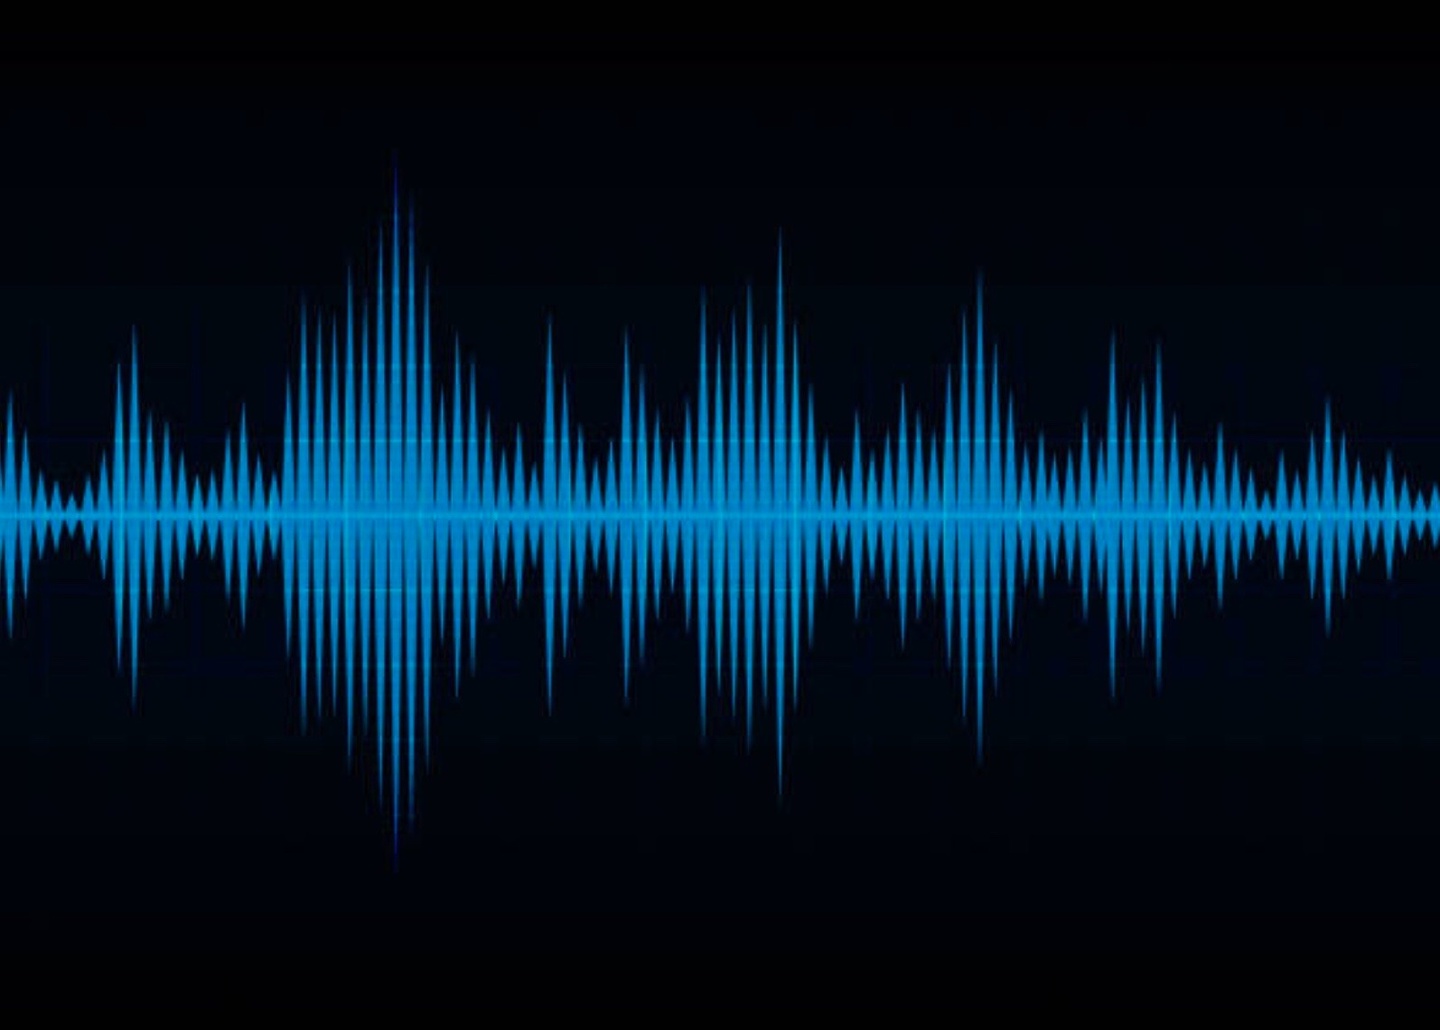 A blue sound wave graph on a black background